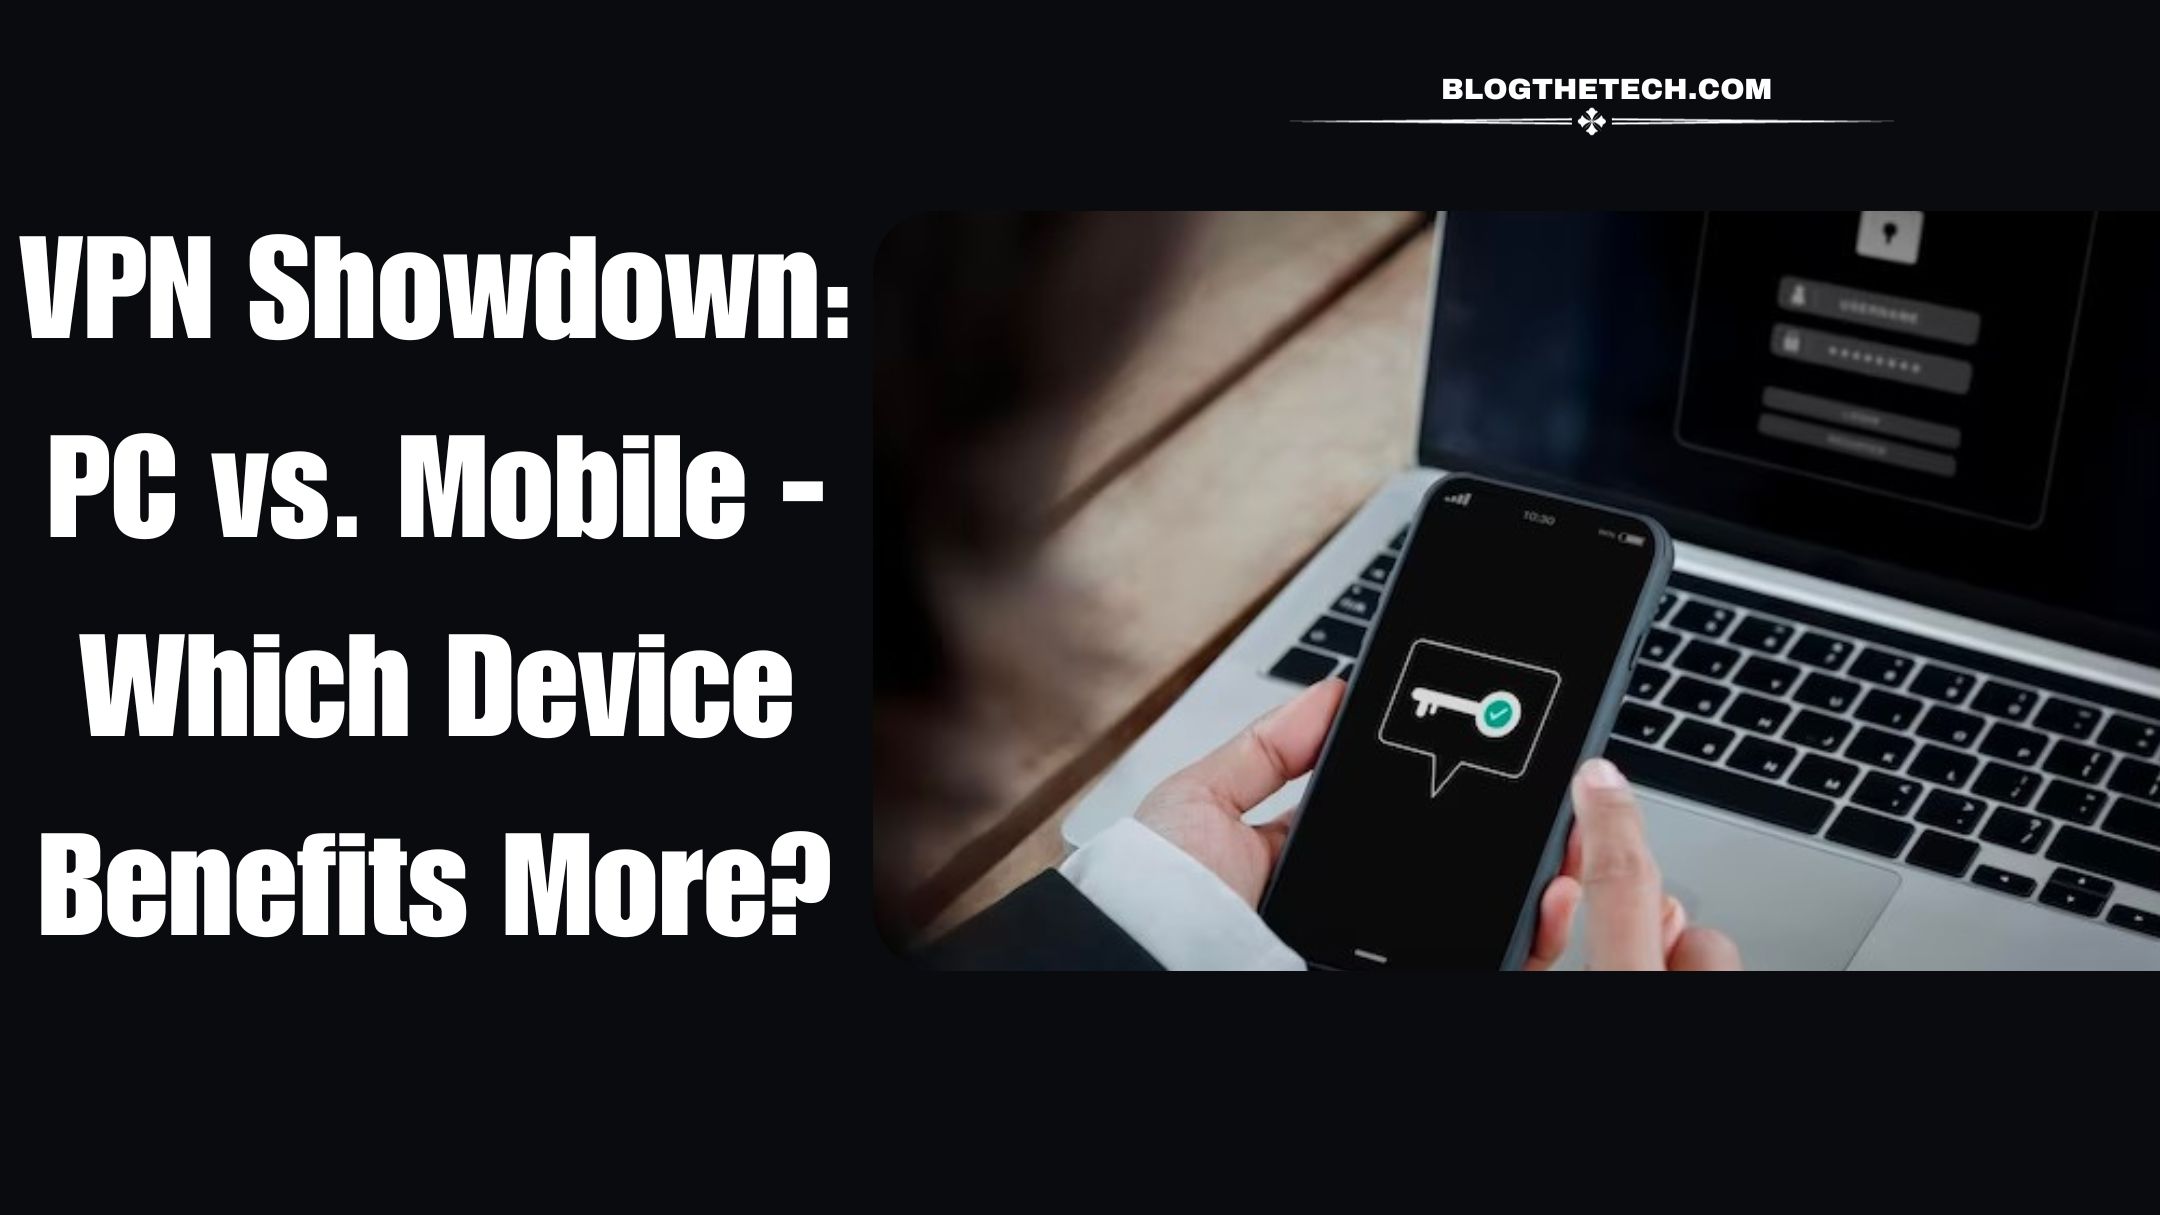 vpn-showdown-pc-vs-mobile-which-benefits-more-featured